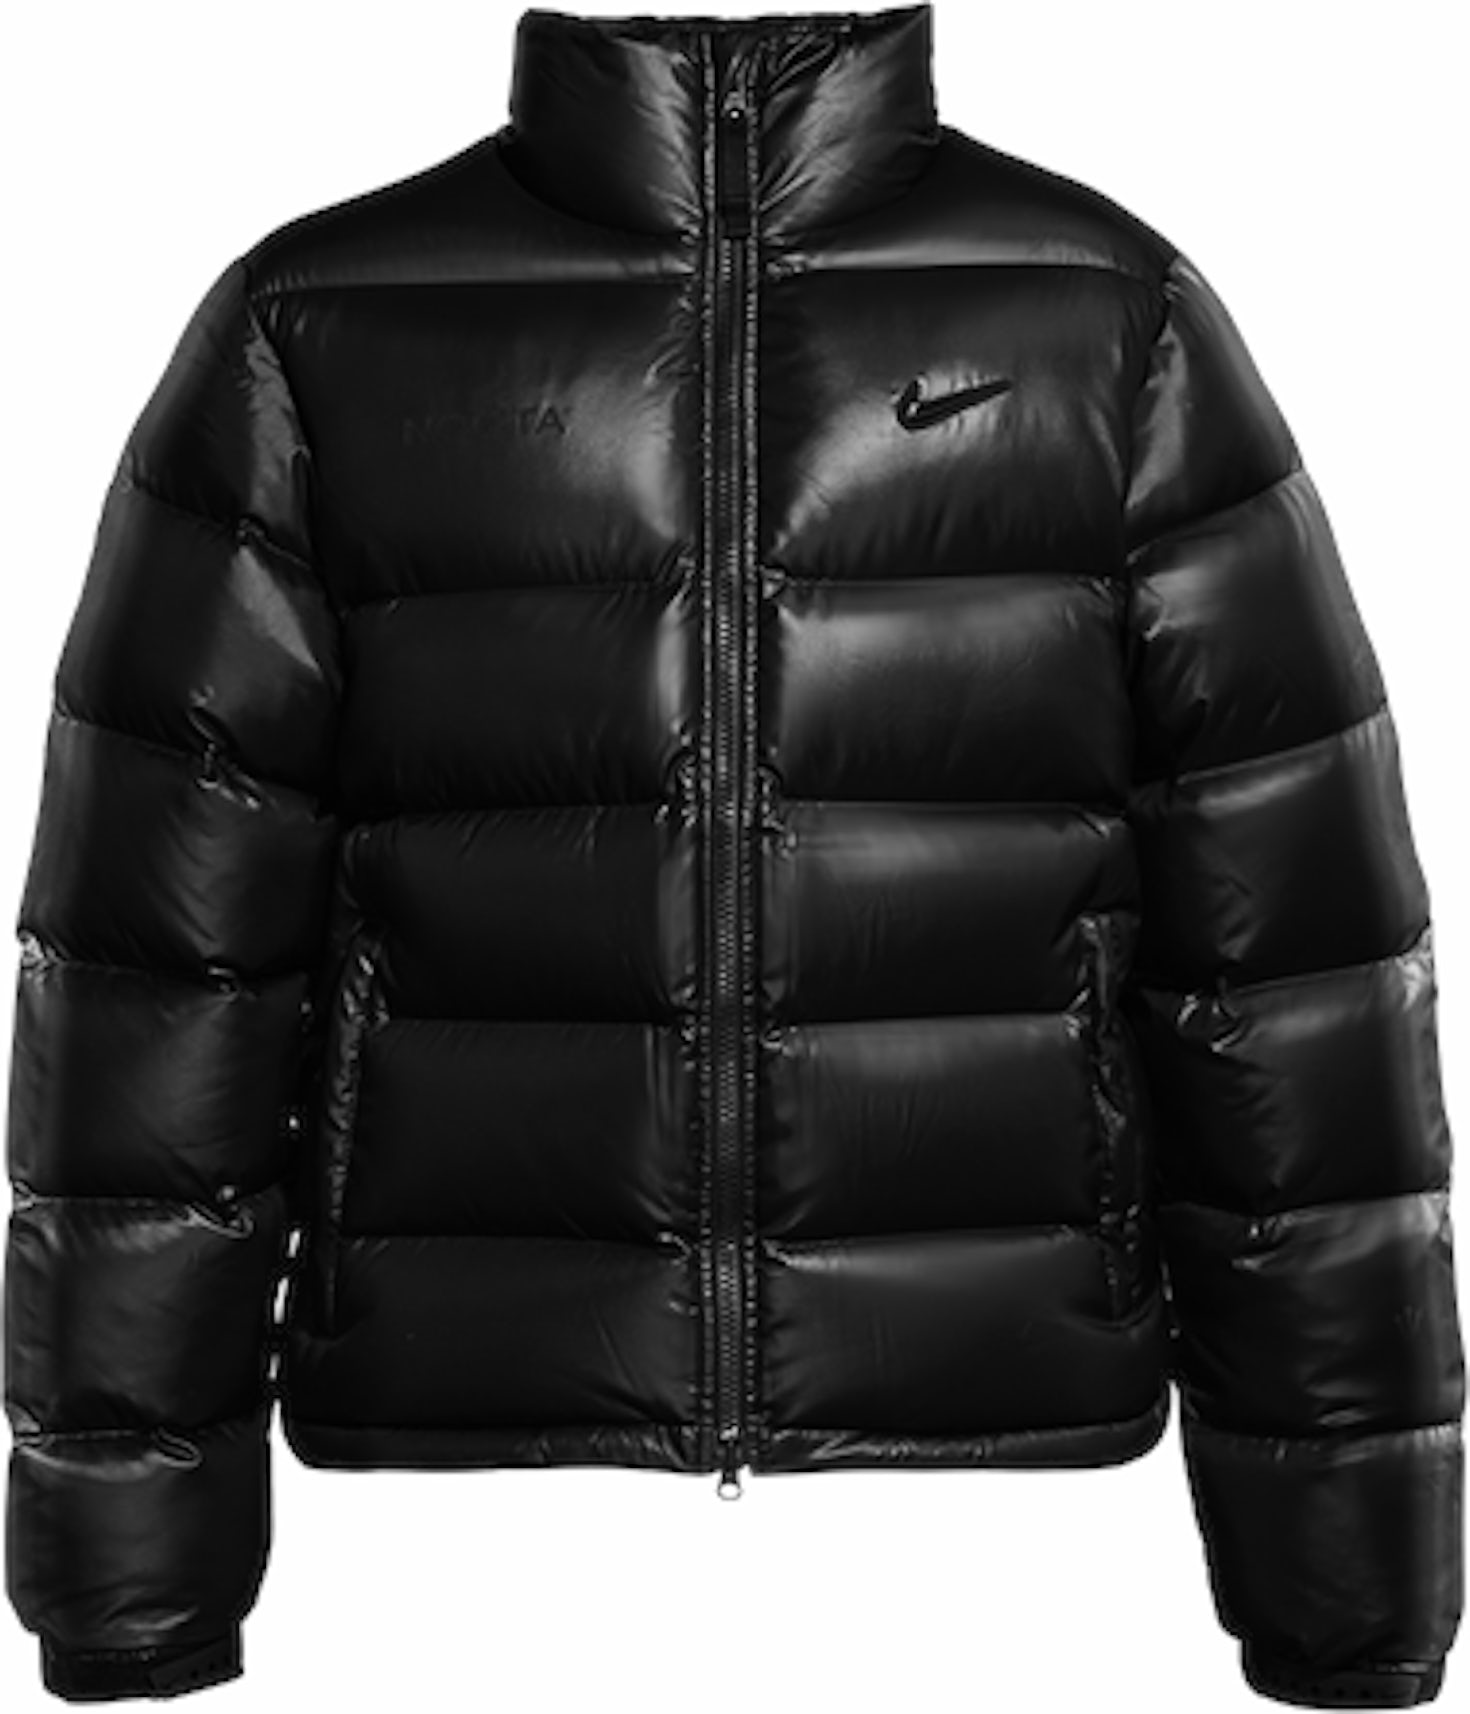 Nike x NOCTA Sunset Puffer Jacket Black - Wishupon